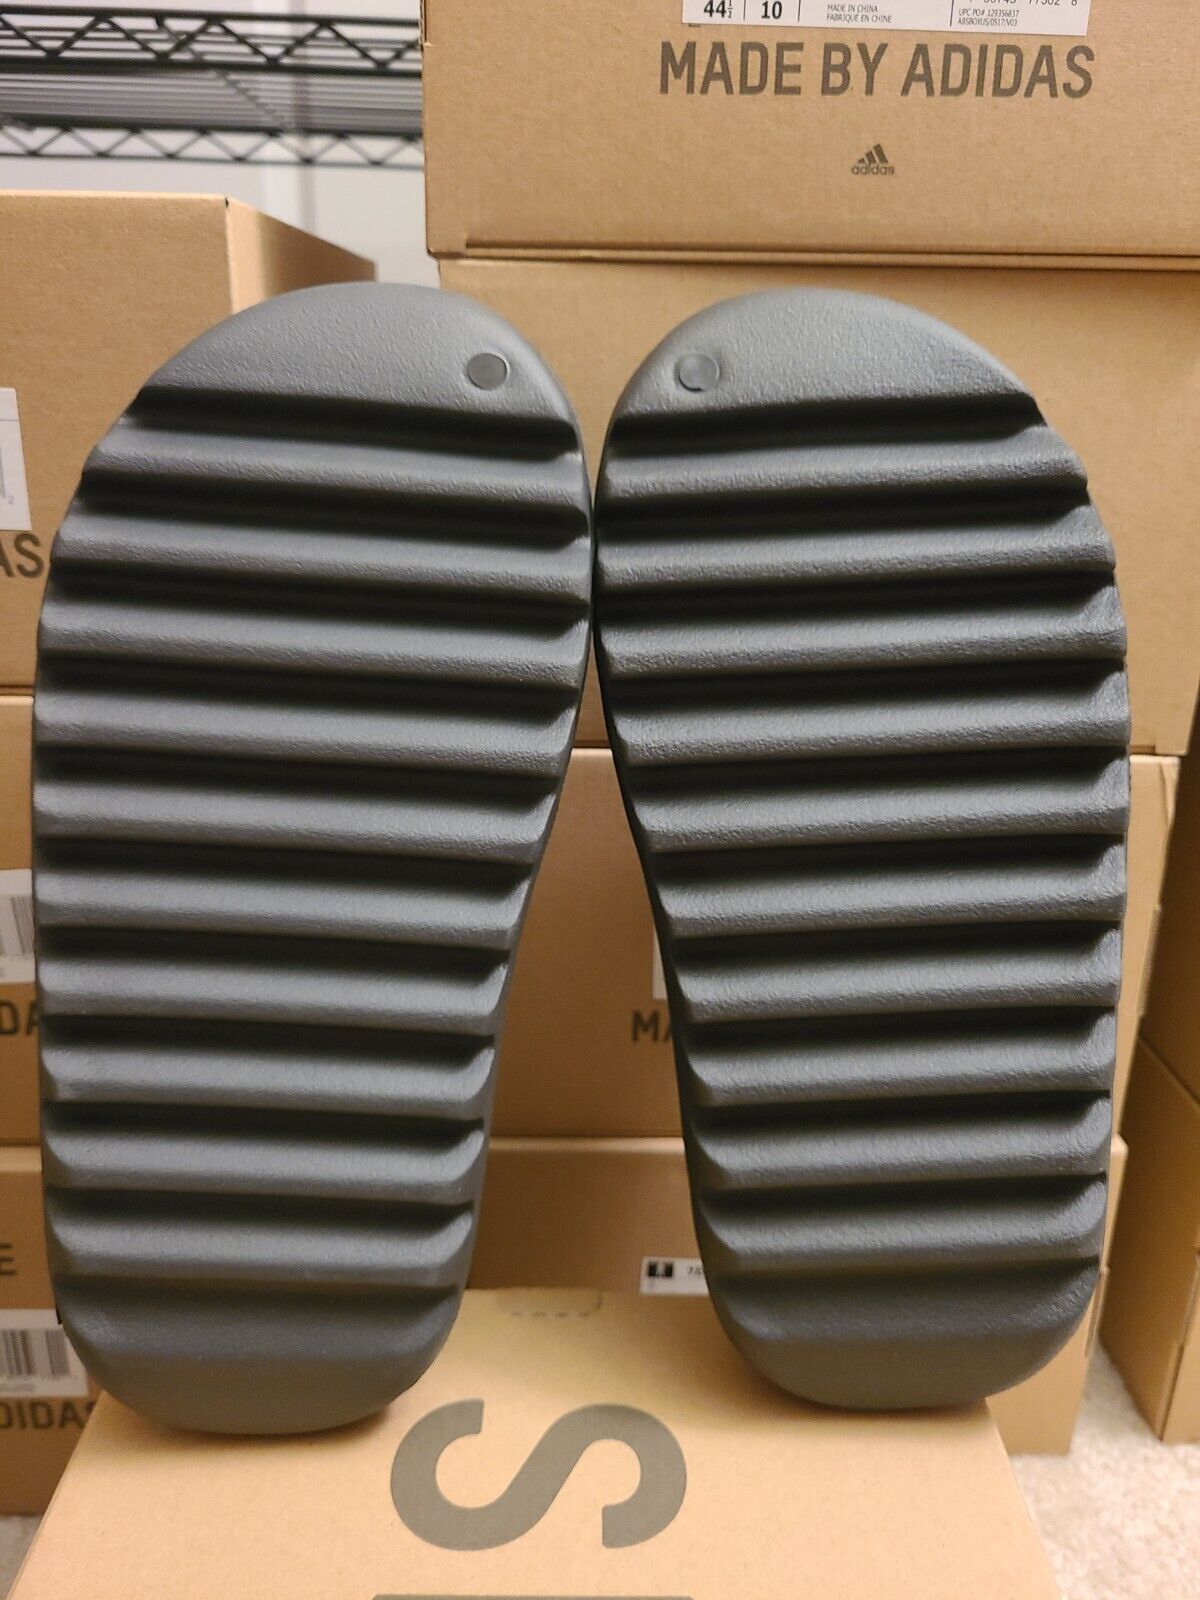 Adidas Yeezy Slide Onyx - size 8 | eBay